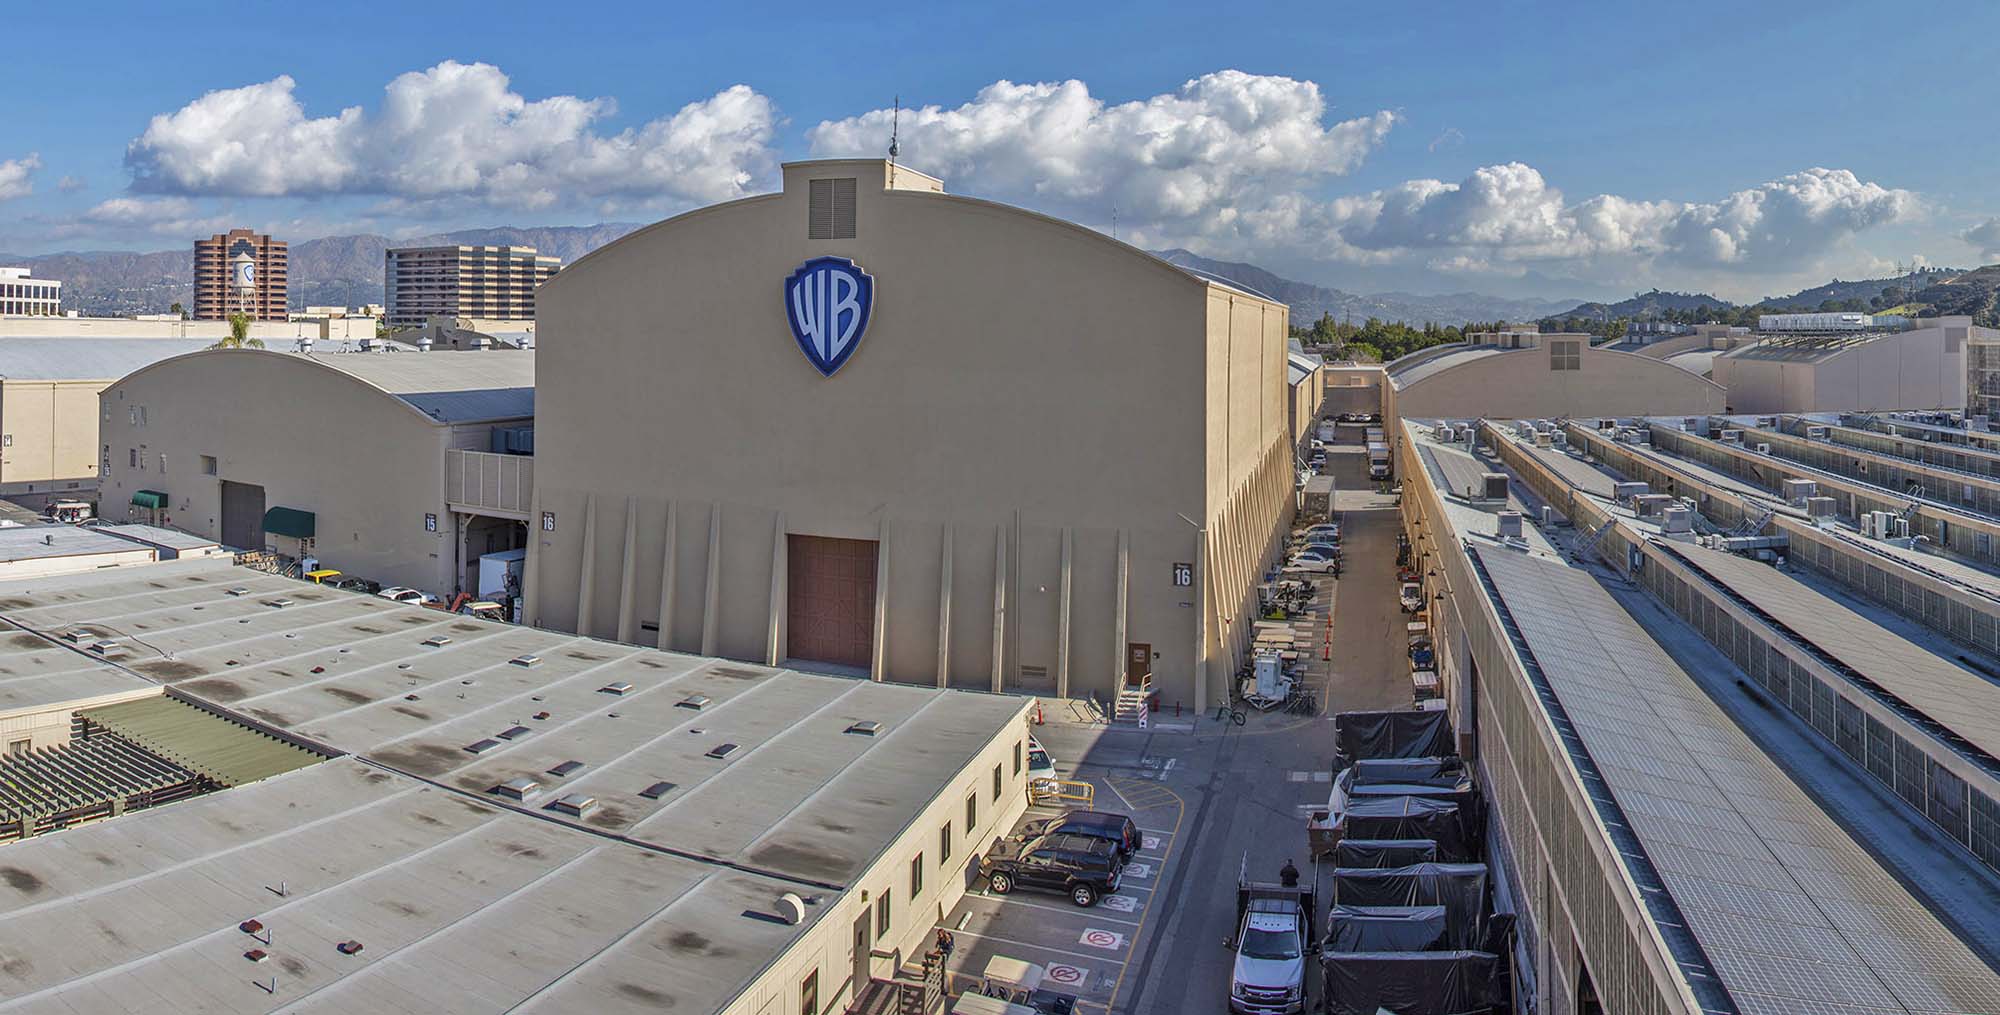 Warner Bros. Studio Hit with Outbreak of Coronavirus Cases as Los Angeles Faces New Mask Mandates